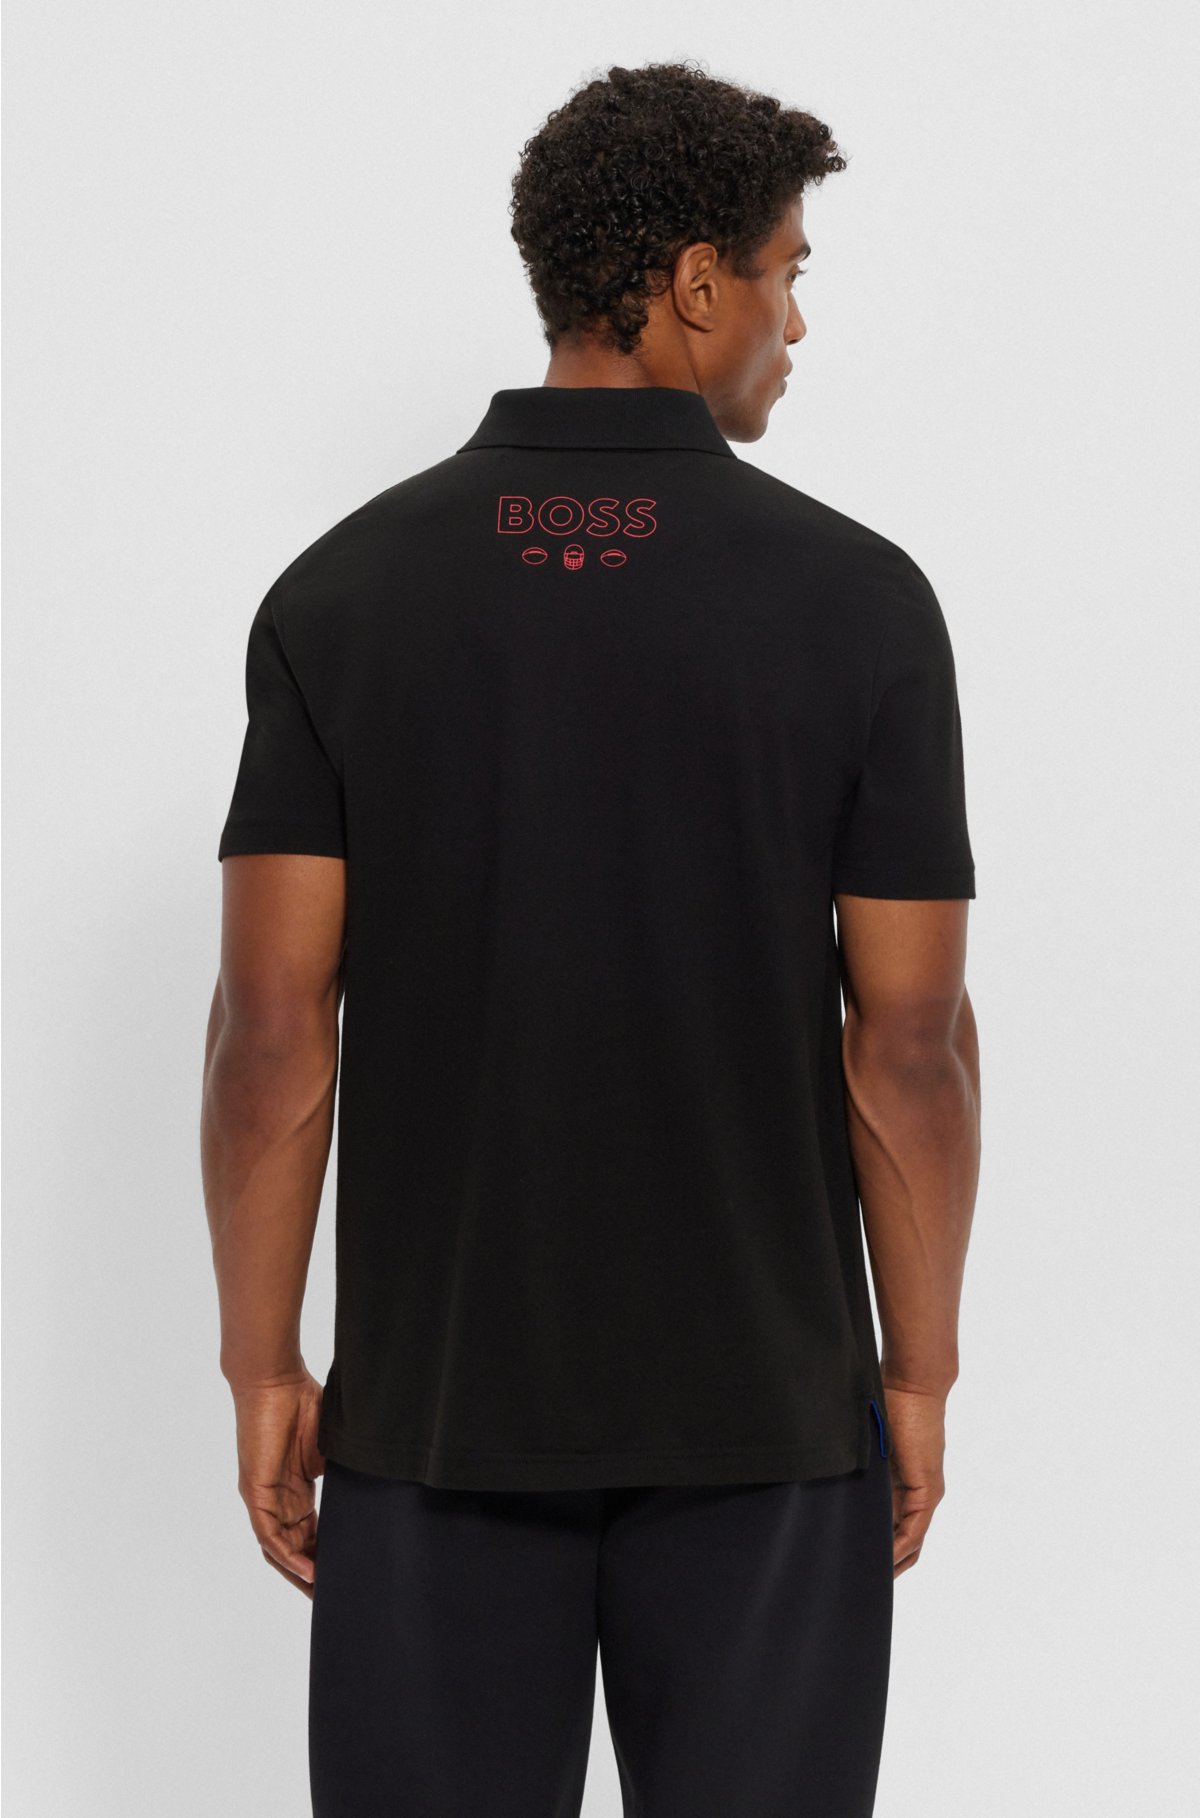 BOSS x NFL cotton-piqué polo shirt with collaborative branding, Giants